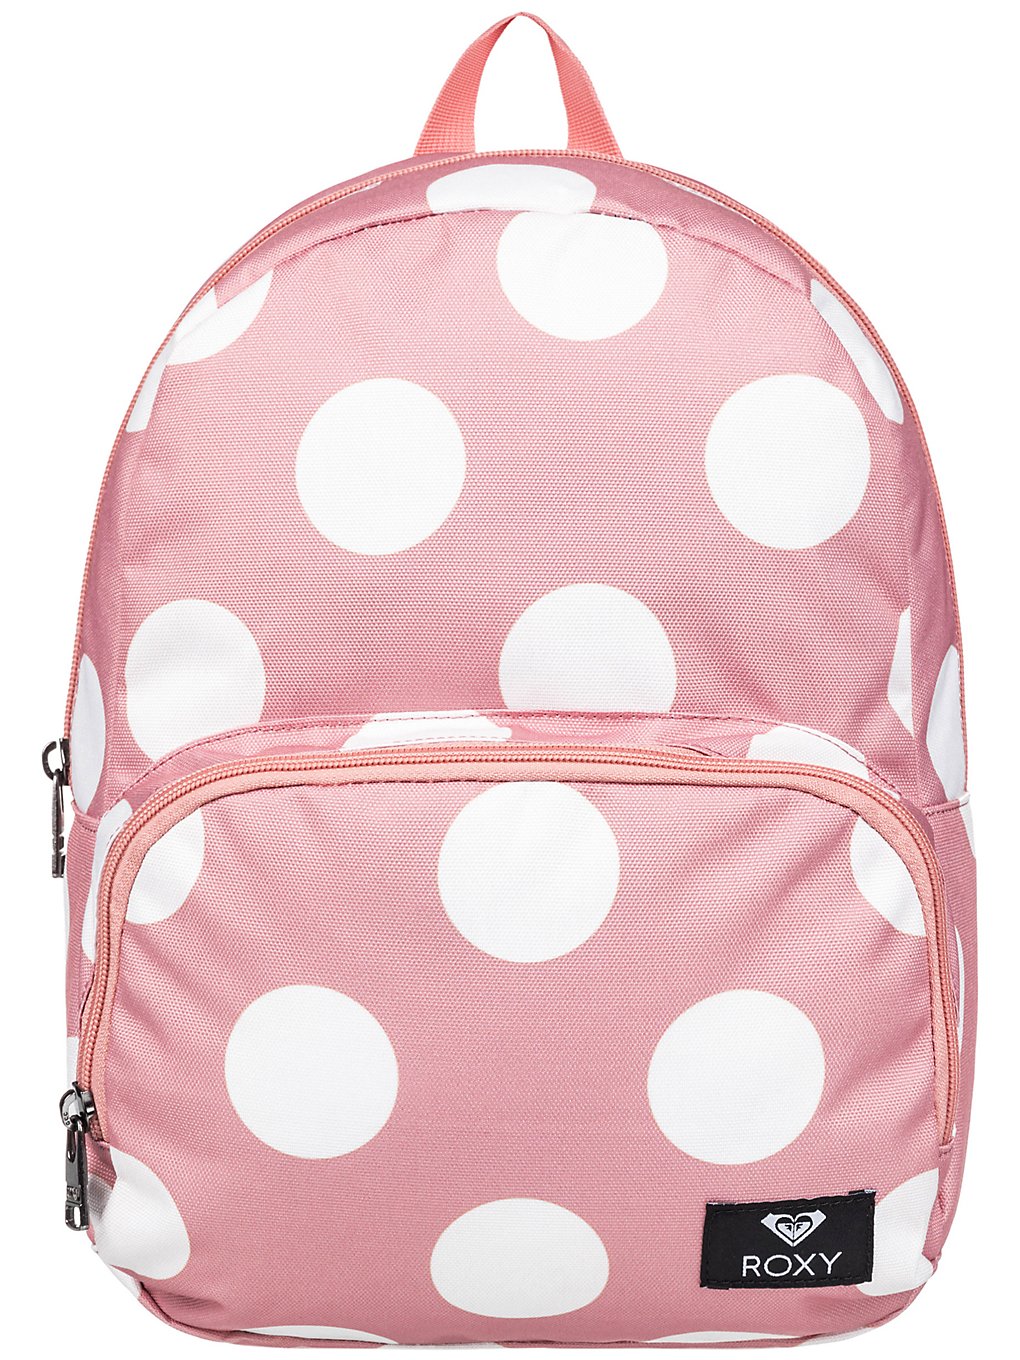 Roxy always core backpack pinkki, roxy